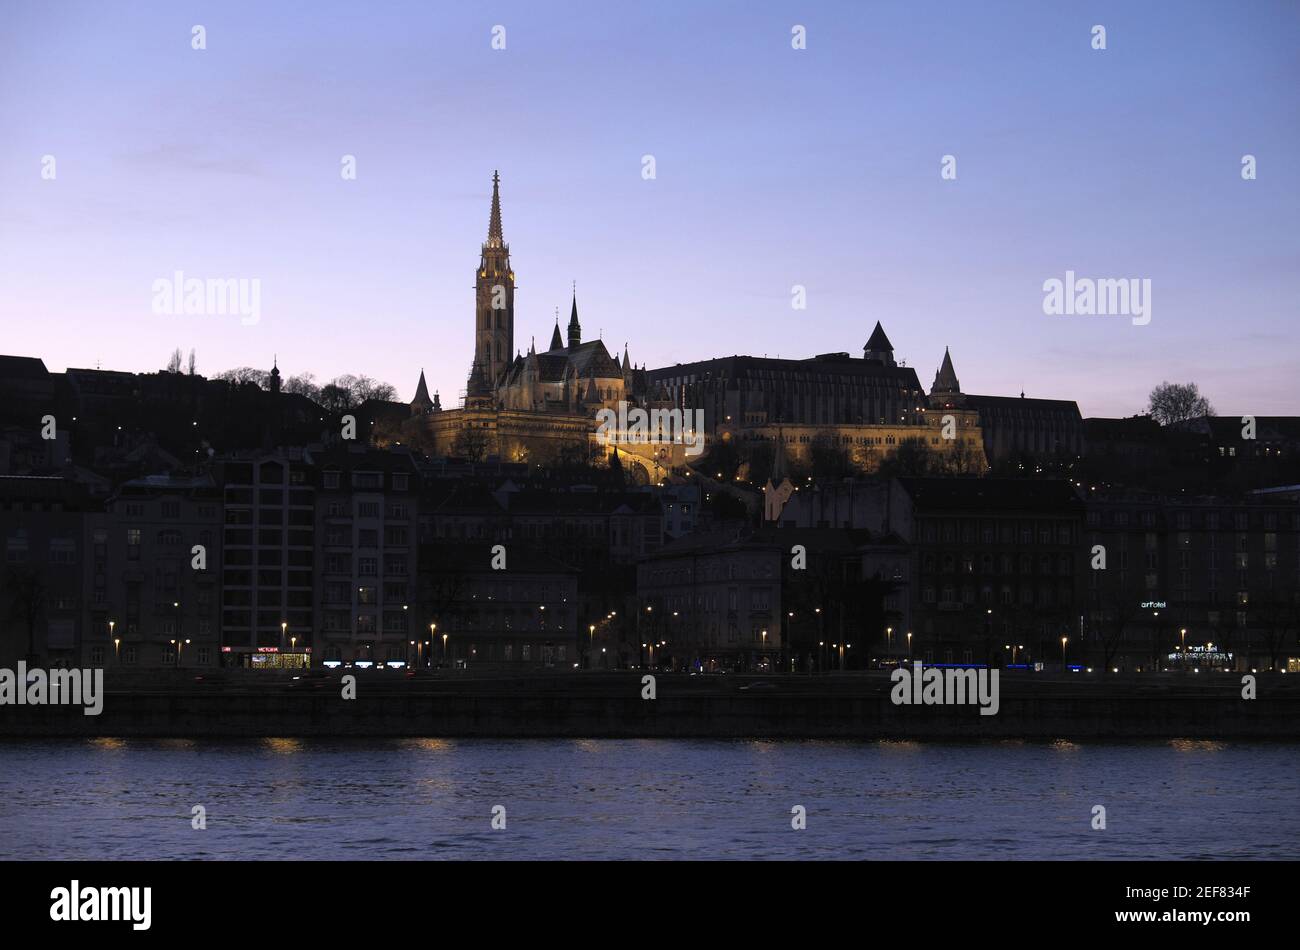 St Matthias Church and Fisherman's Bastion, seen over River Duna (Danube) at night, Budapest, Hungary. Stock Photo